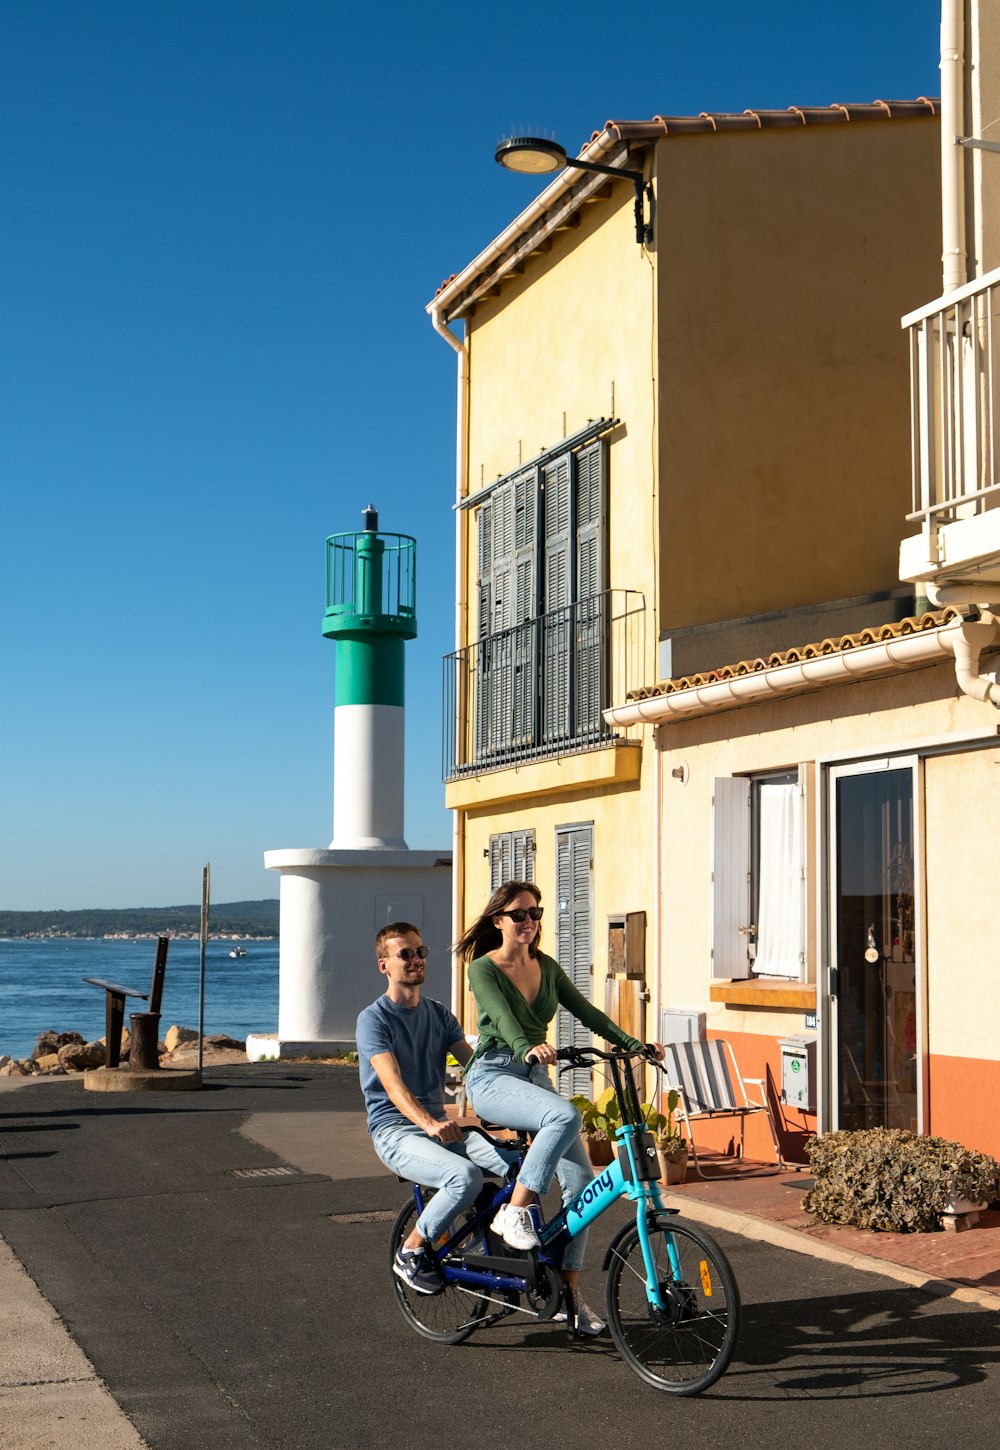 a man and a woman riding a bike next to a light house